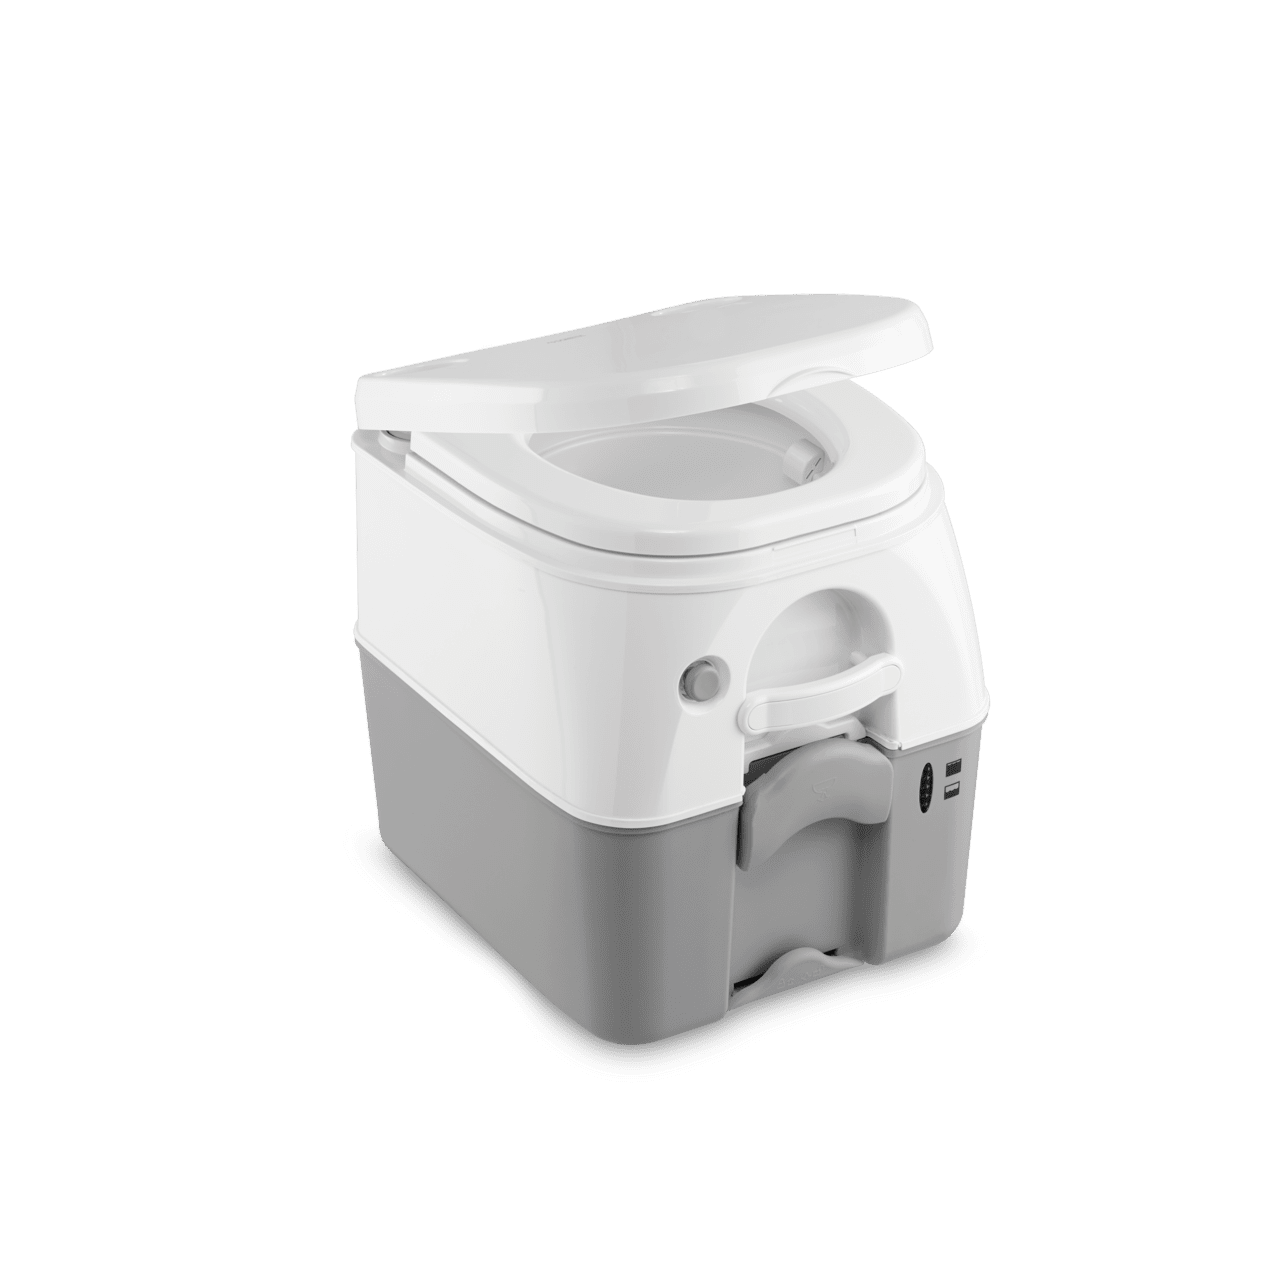 Dometic 976 Portable Toilet